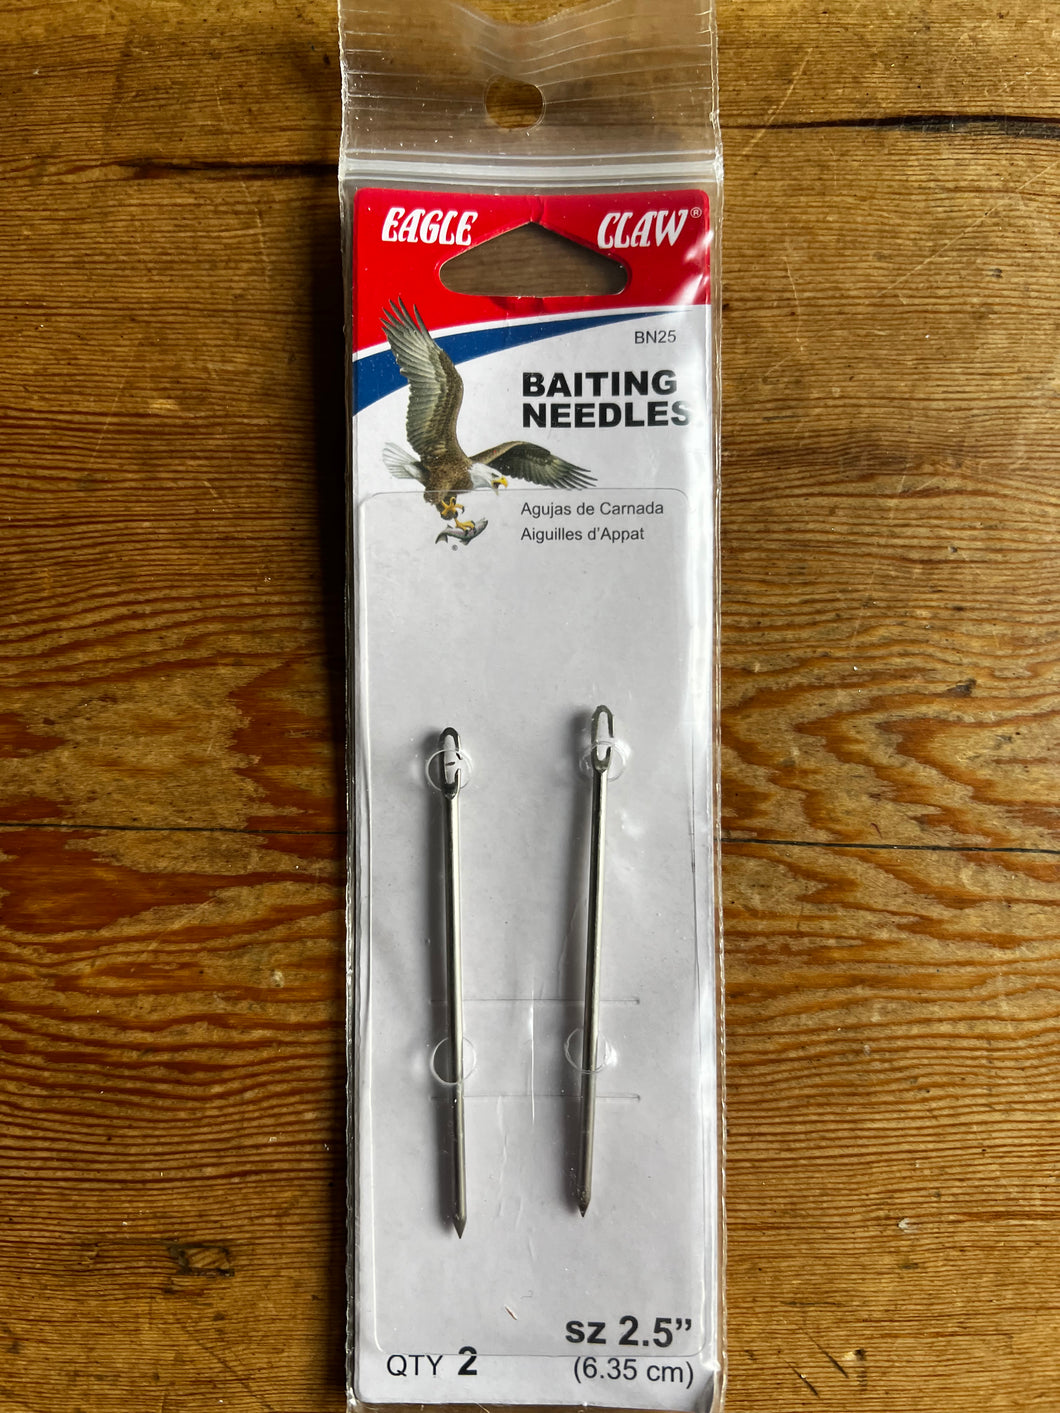 Eagle Claw Baiting Needles